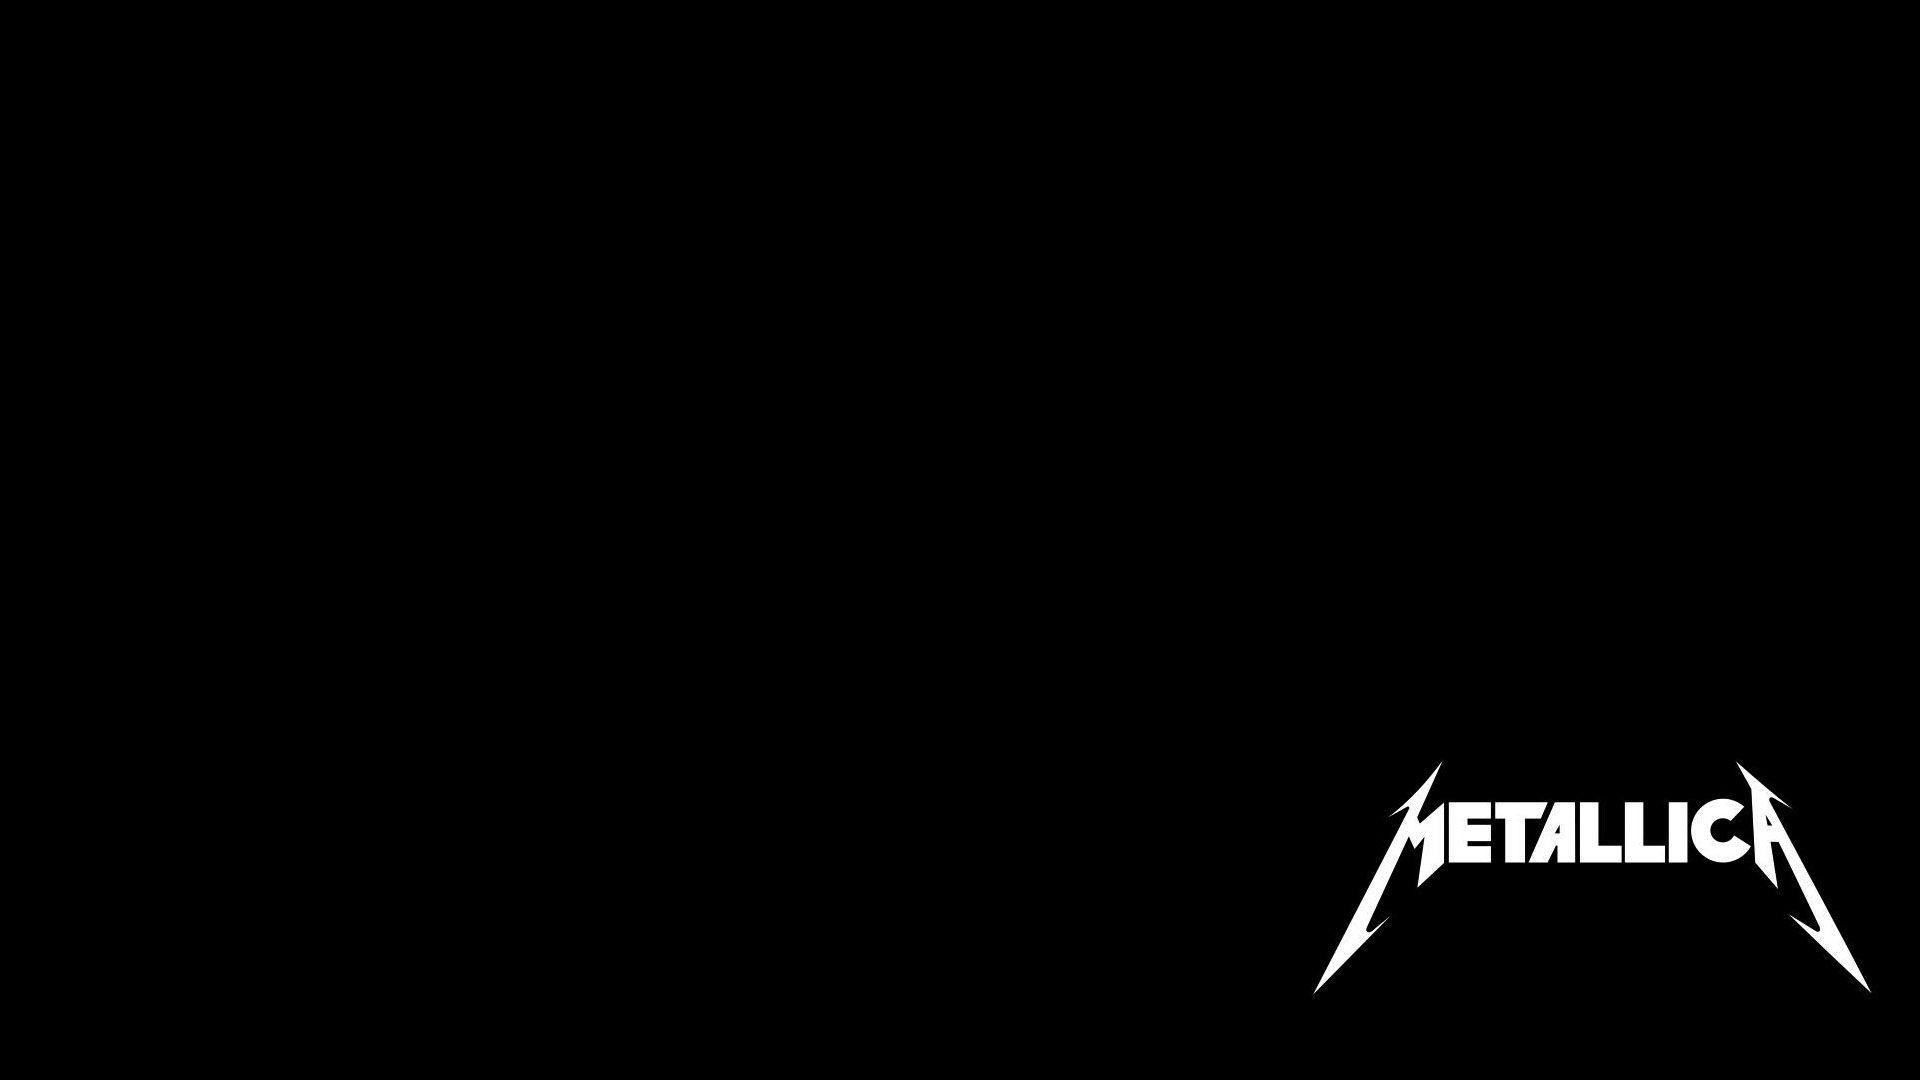 1920x1080 Metallica HD Background - Pitch Black by rohynrajesh on DeviantArt